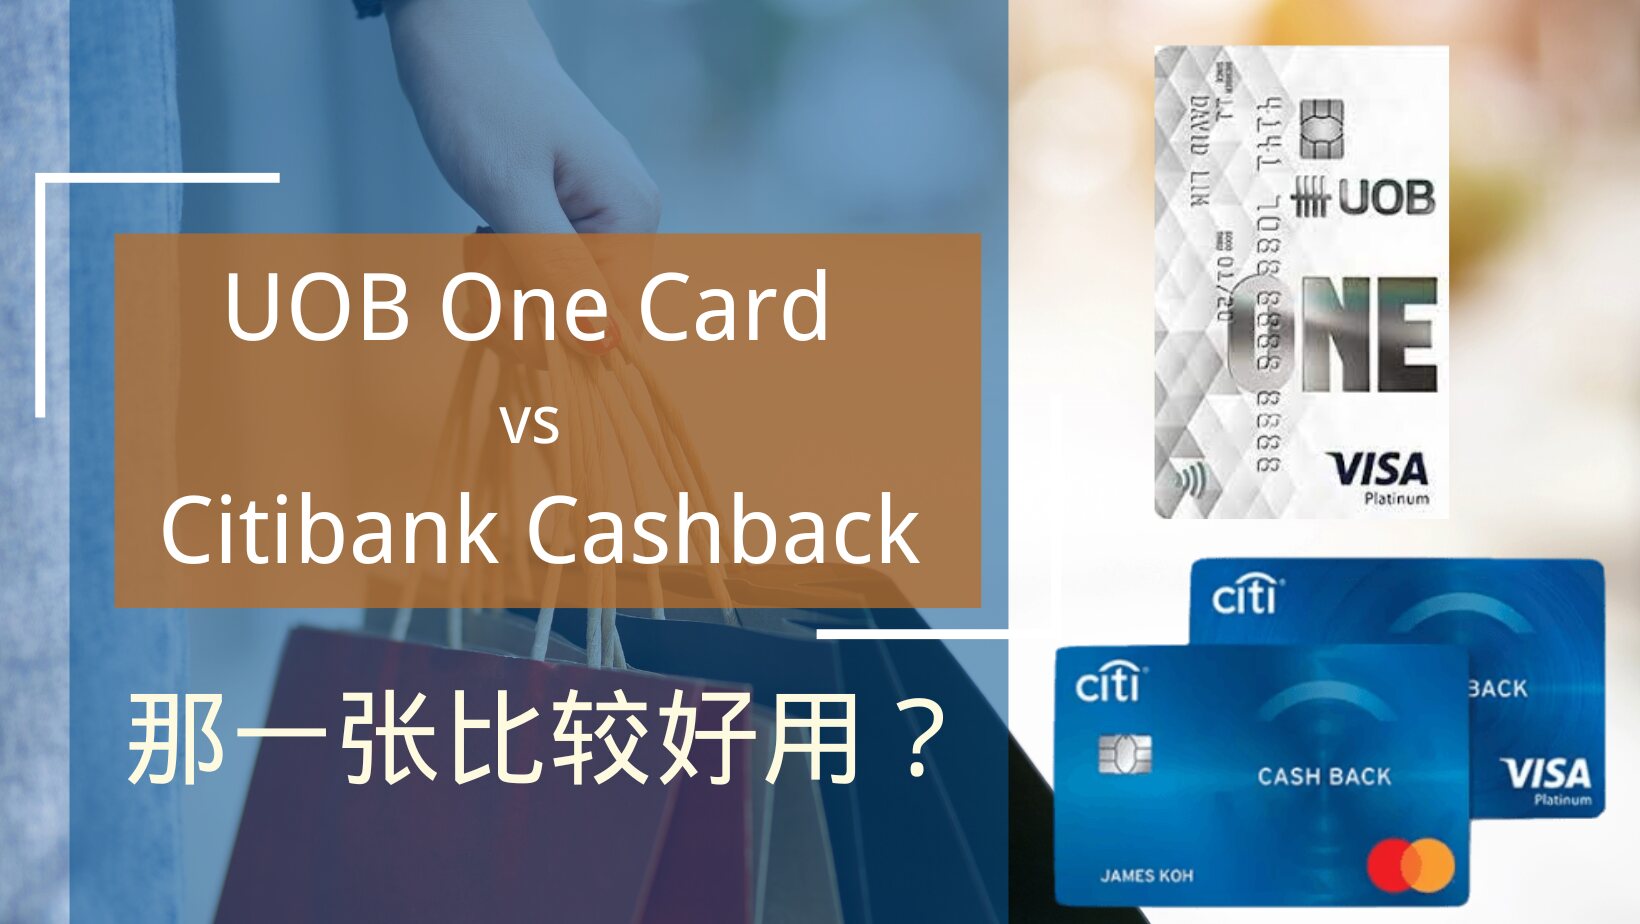 uob-one-card-vs-citibank-cashback-17creditcard